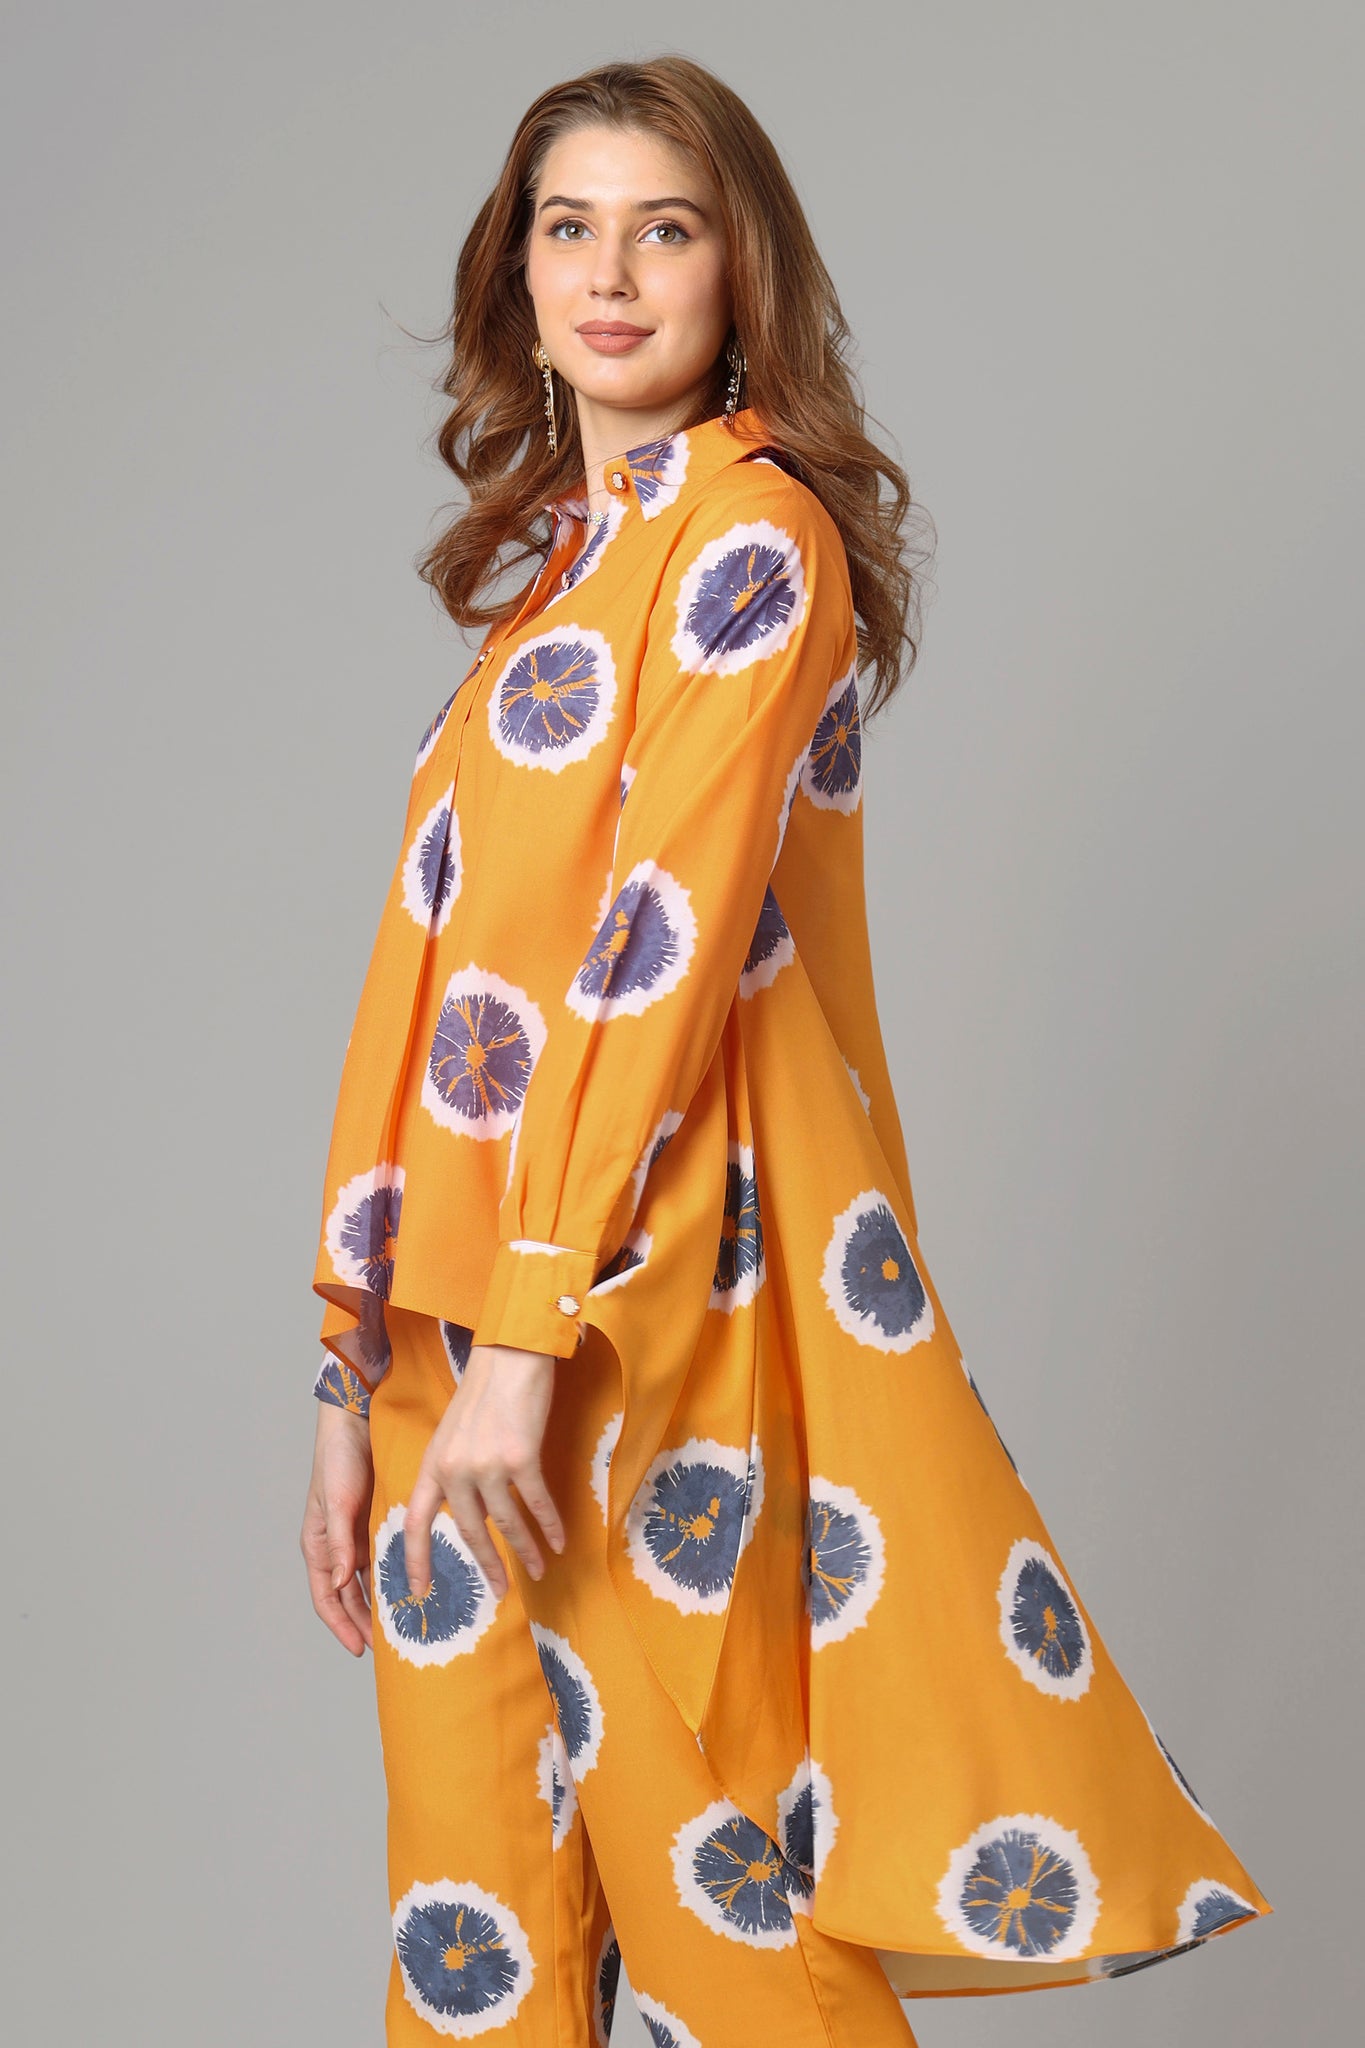 Exclusive Orange Dip Hem Oversized Shirt For Women